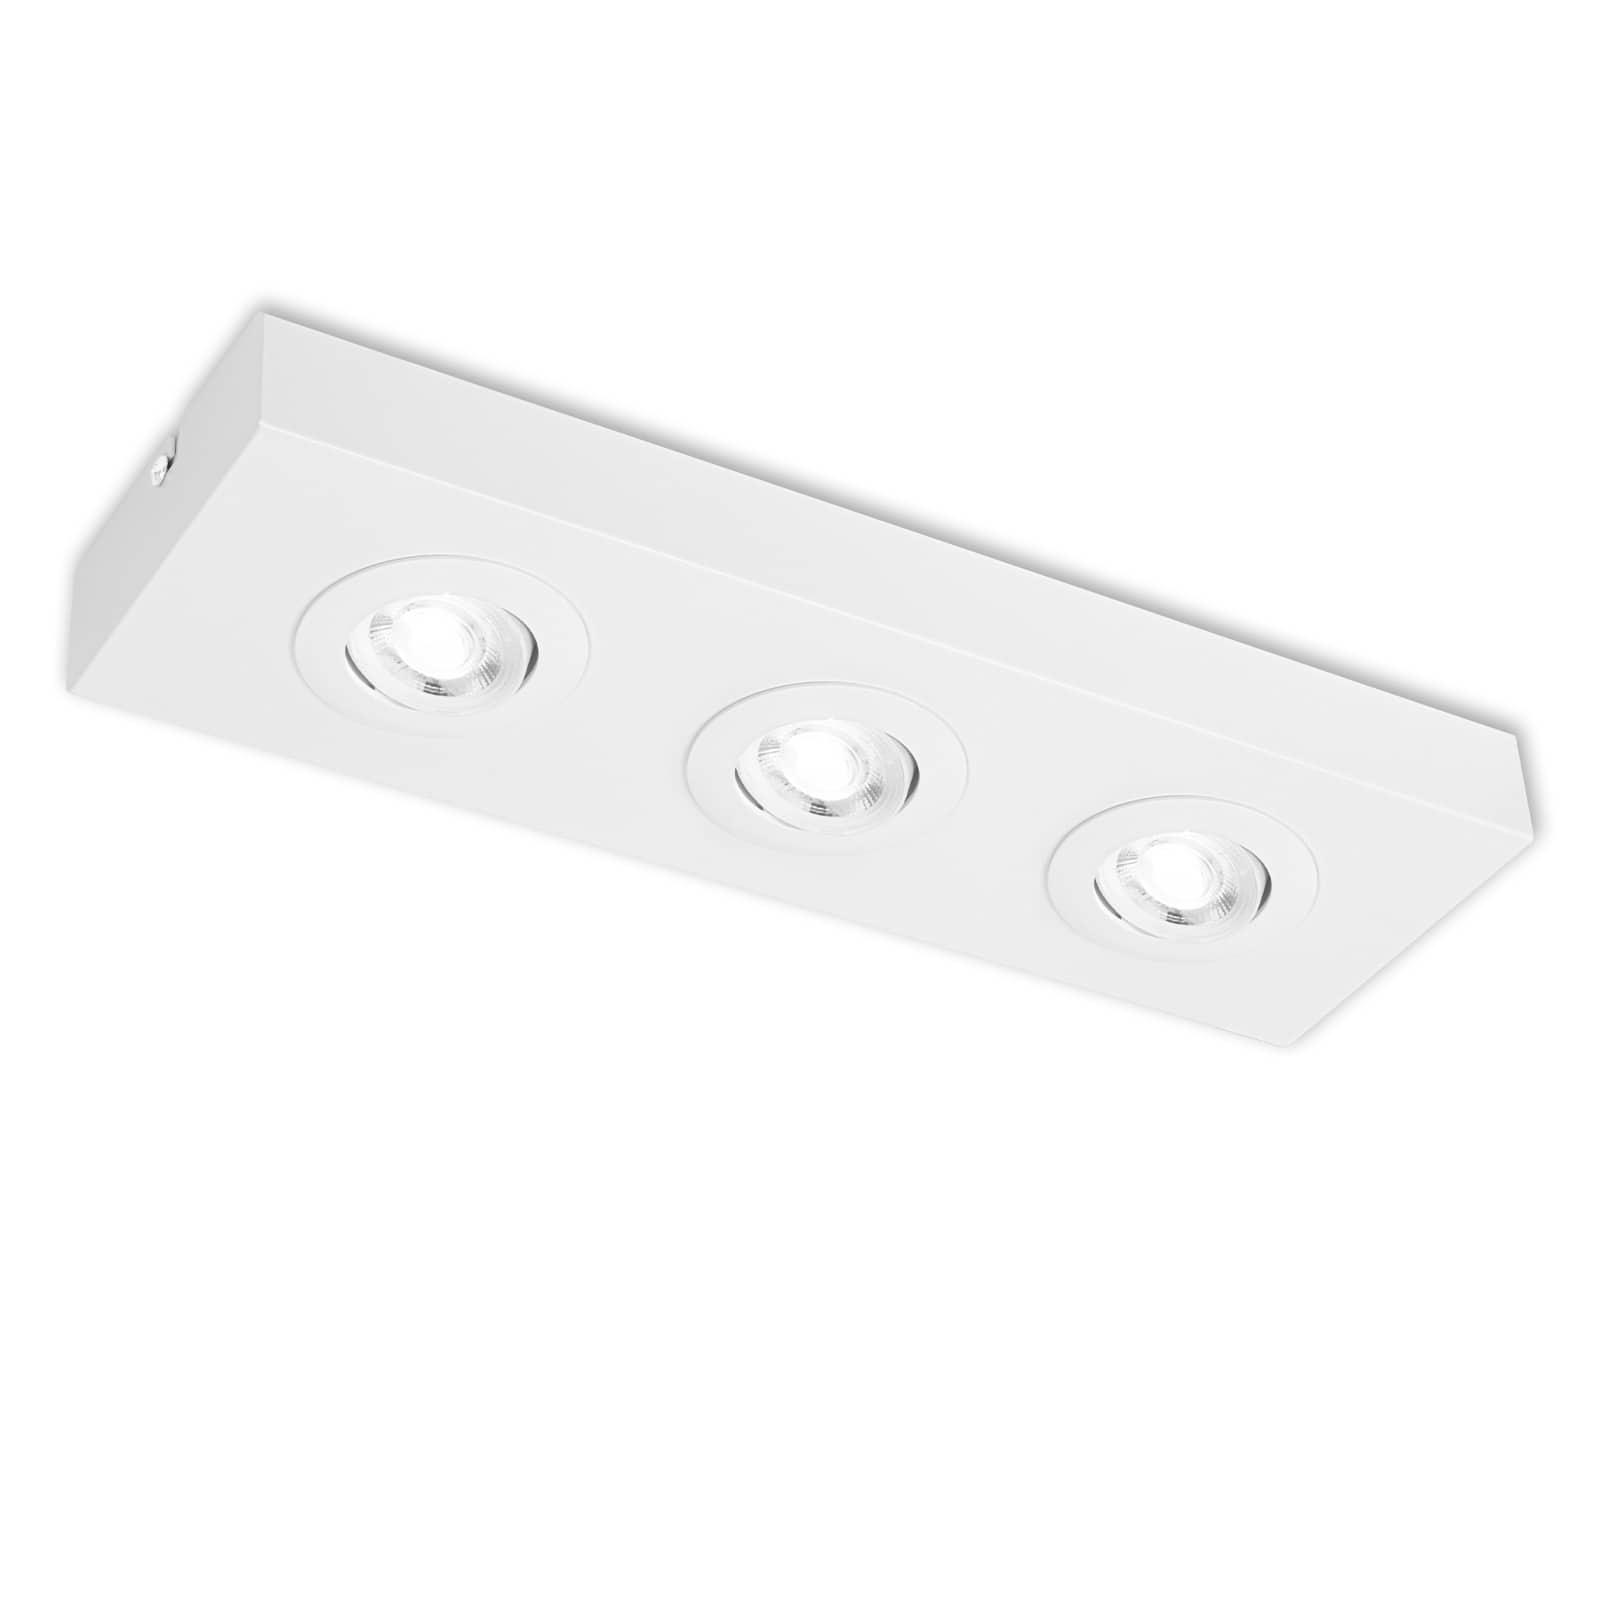 CTS LED ceiling light, 38.5 cm, 4W, 460LM, white